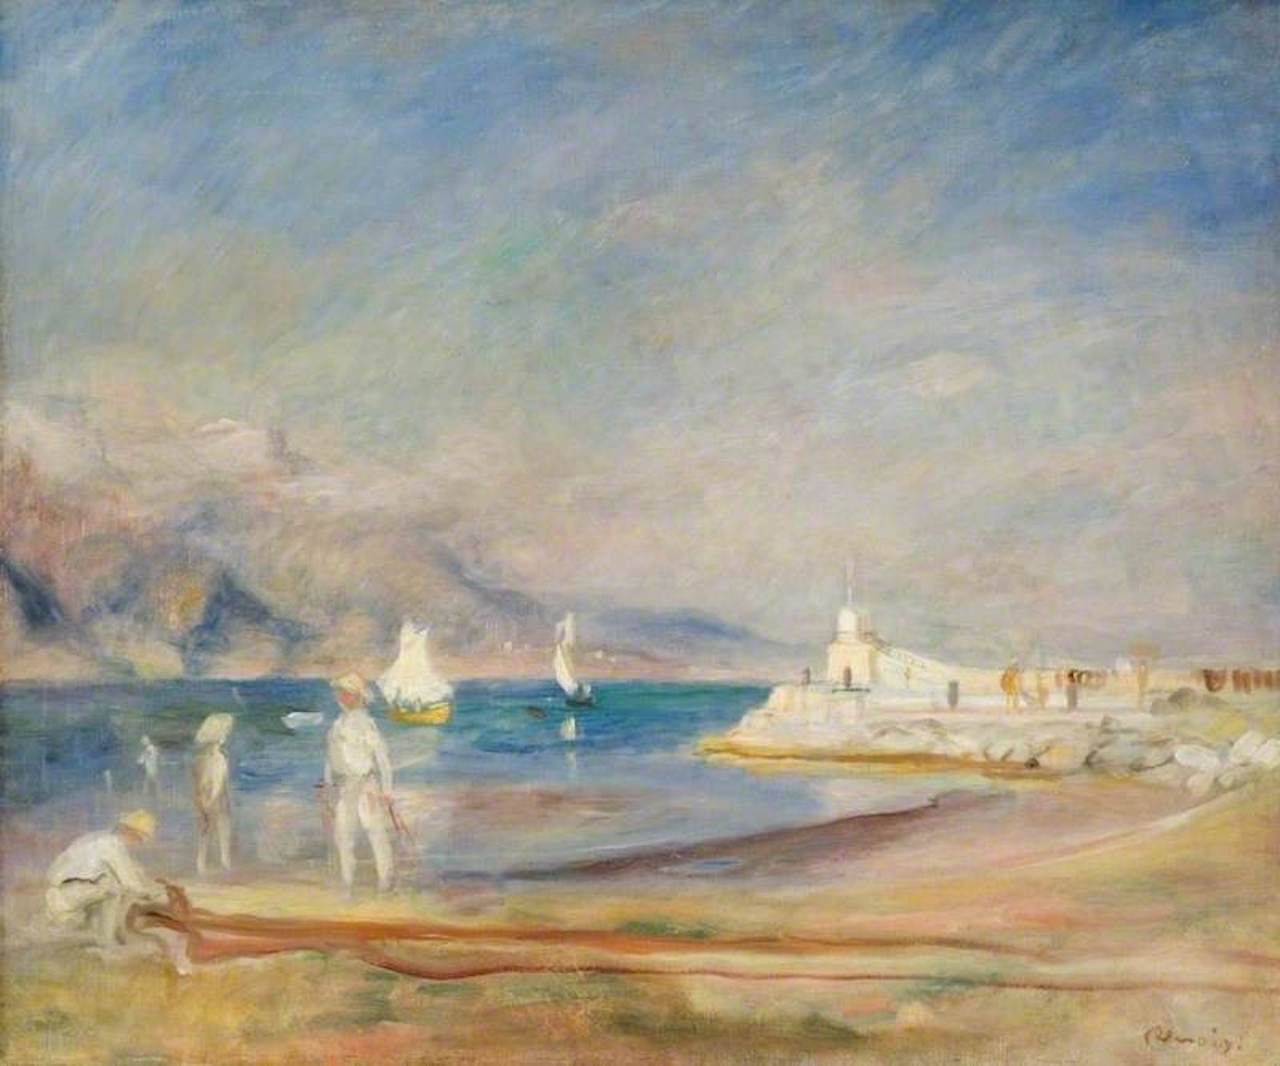 Сен-Тропе by Pierre-Auguste Renoir - 1902 